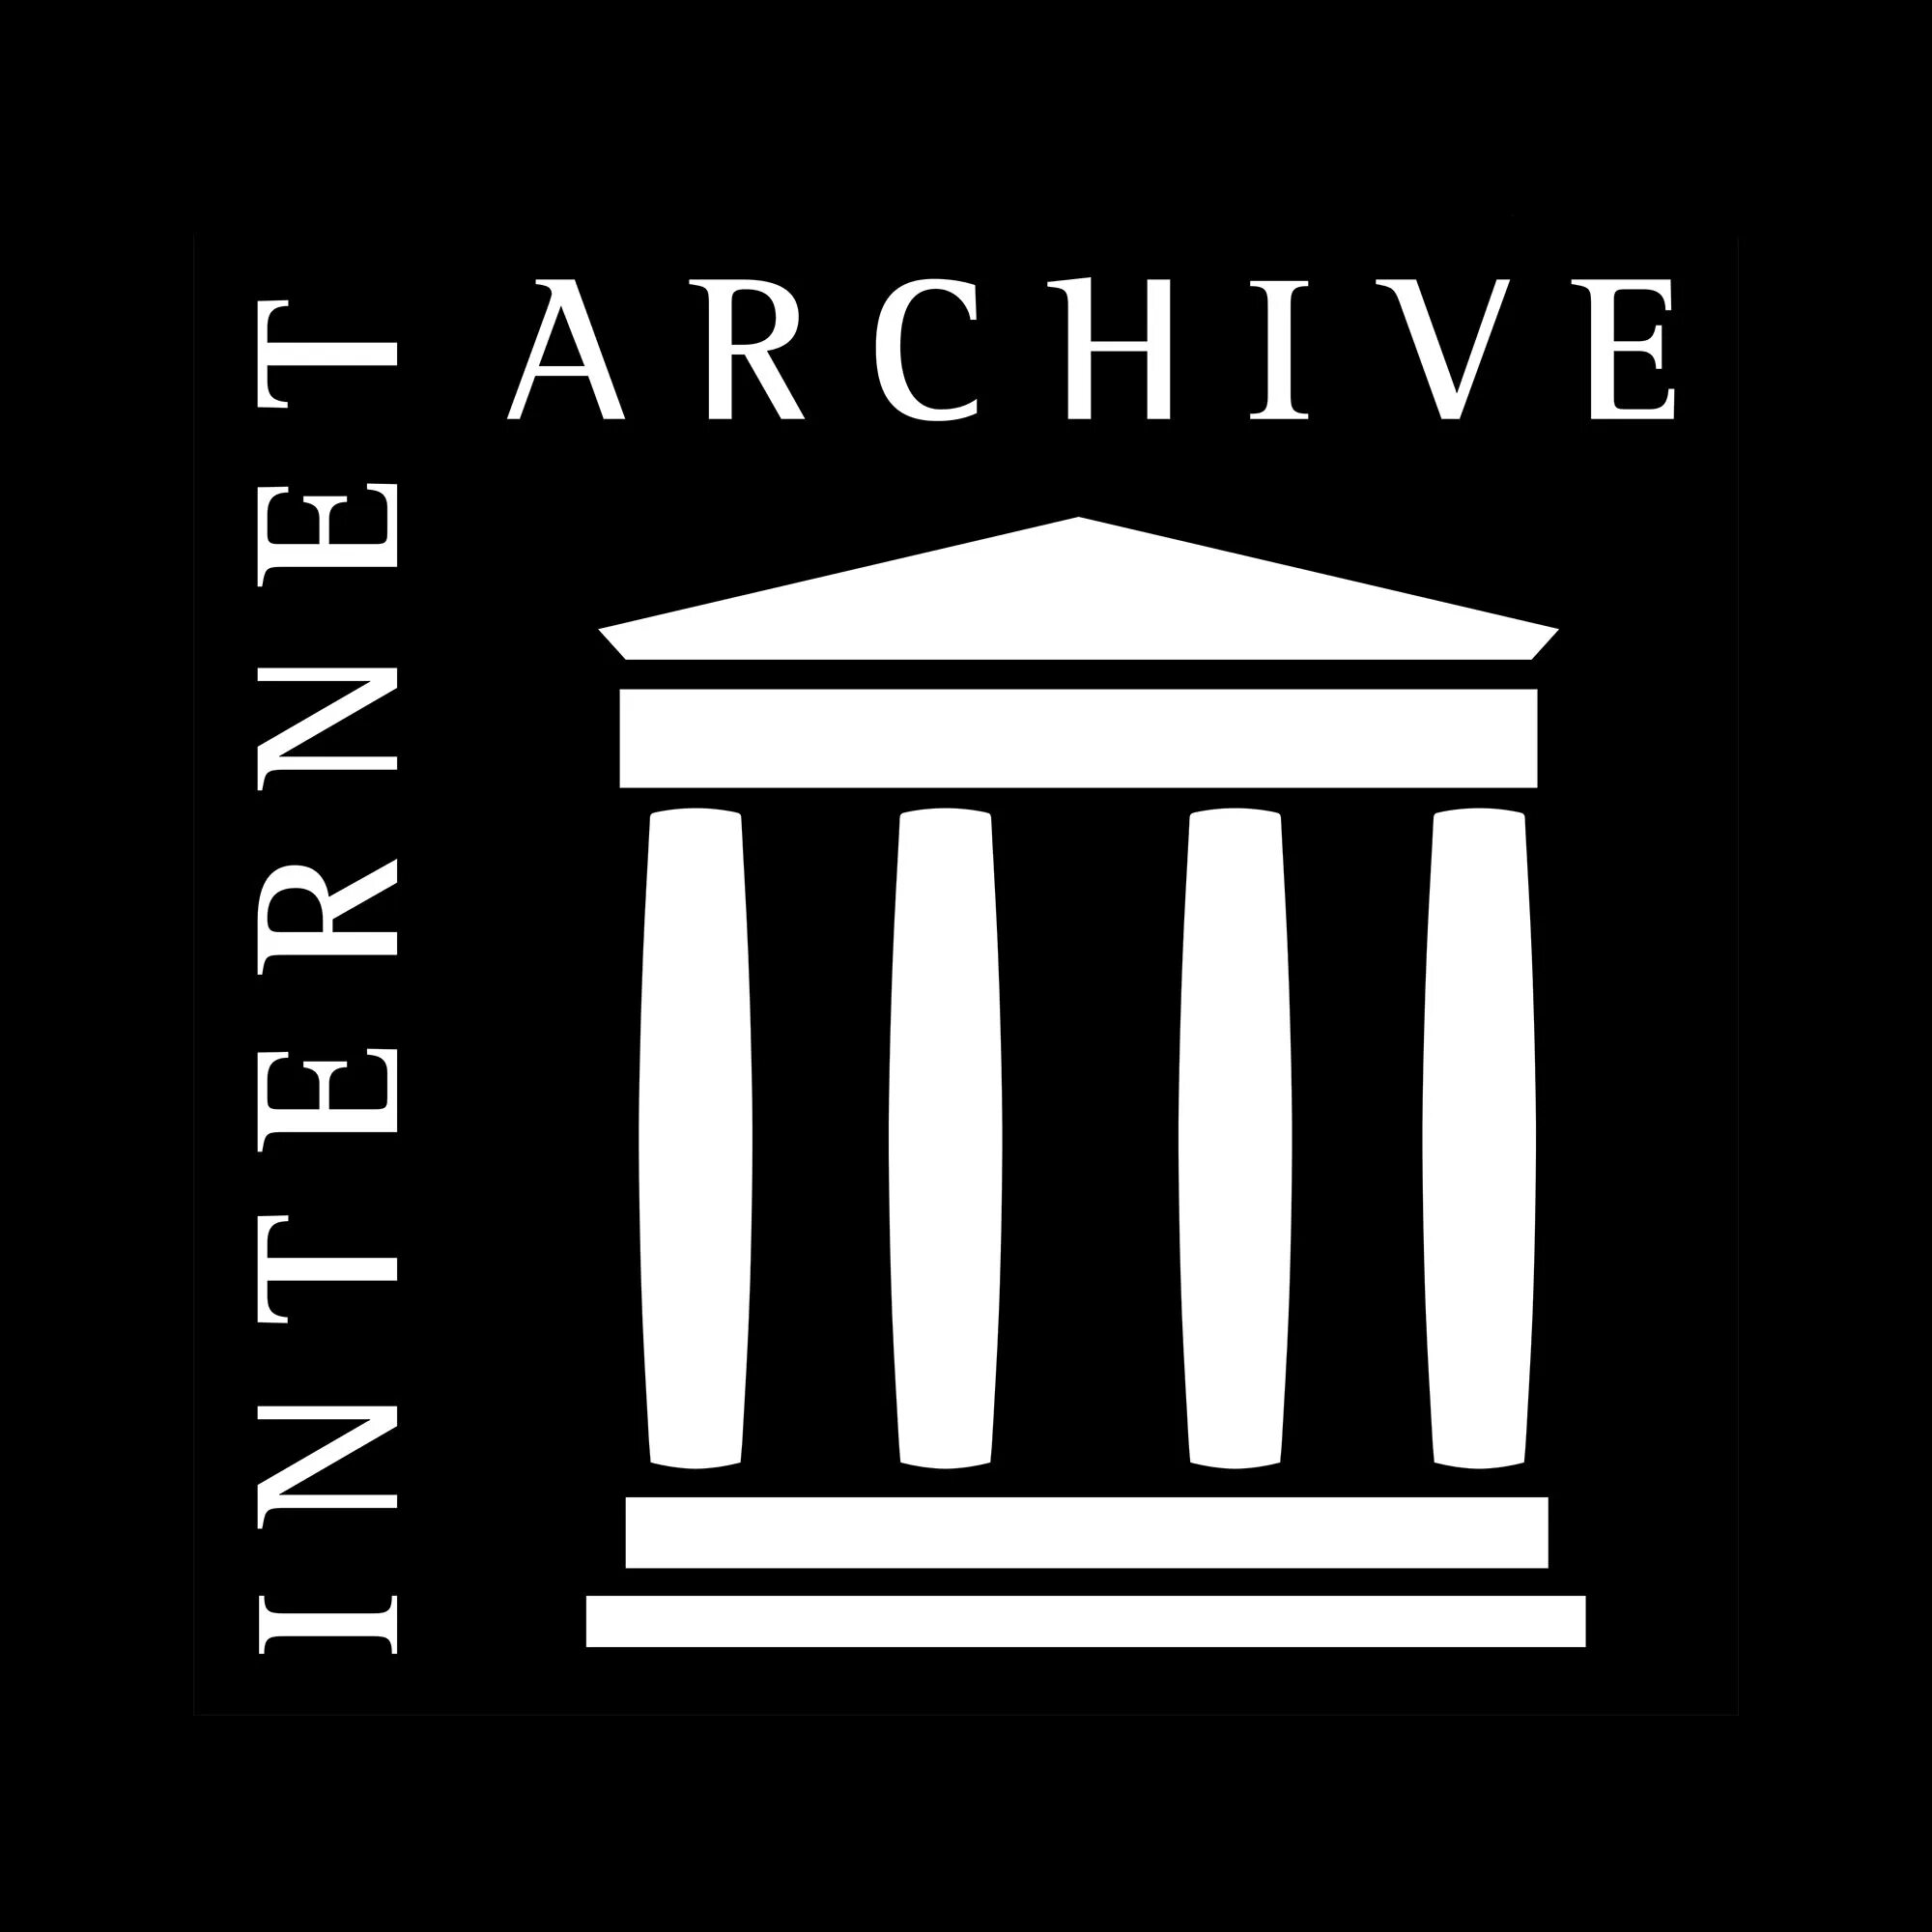 1 archive org. Internet Archive. Internet Archive logo. Архитектурные здания. Архив логотип.